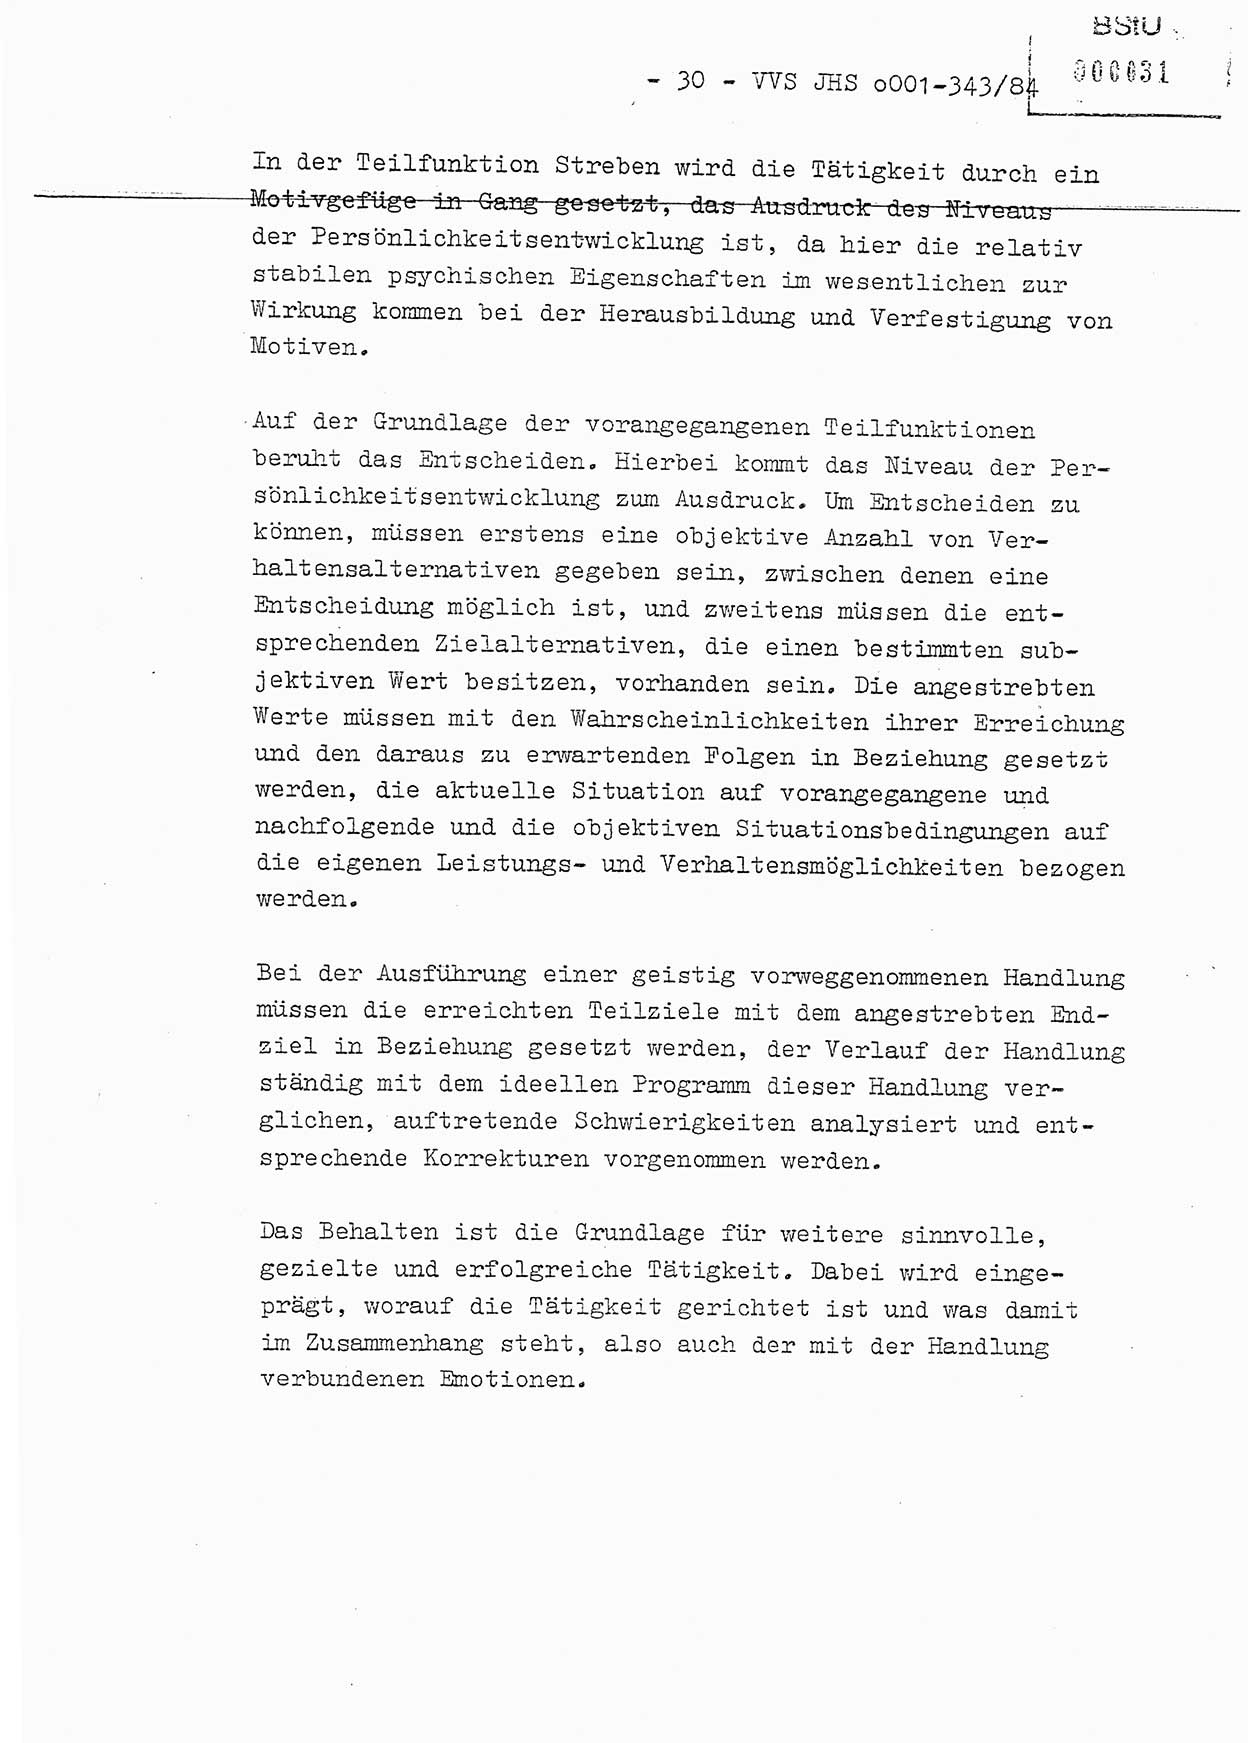 Diplomarbeit, Oberleutnant Bernd Michael (HA Ⅸ/5), Oberleutnant Peter Felber (HA IX/5), Ministerium für Staatssicherheit (MfS) [Deutsche Demokratische Republik (DDR)], Juristische Hochschule (JHS), Vertrauliche Verschlußsache (VVS) o001-343/84, Potsdam 1985, Seite 30 (Dipl.-Arb. MfS DDR JHS VVS o001-343/84 1985, S. 30)